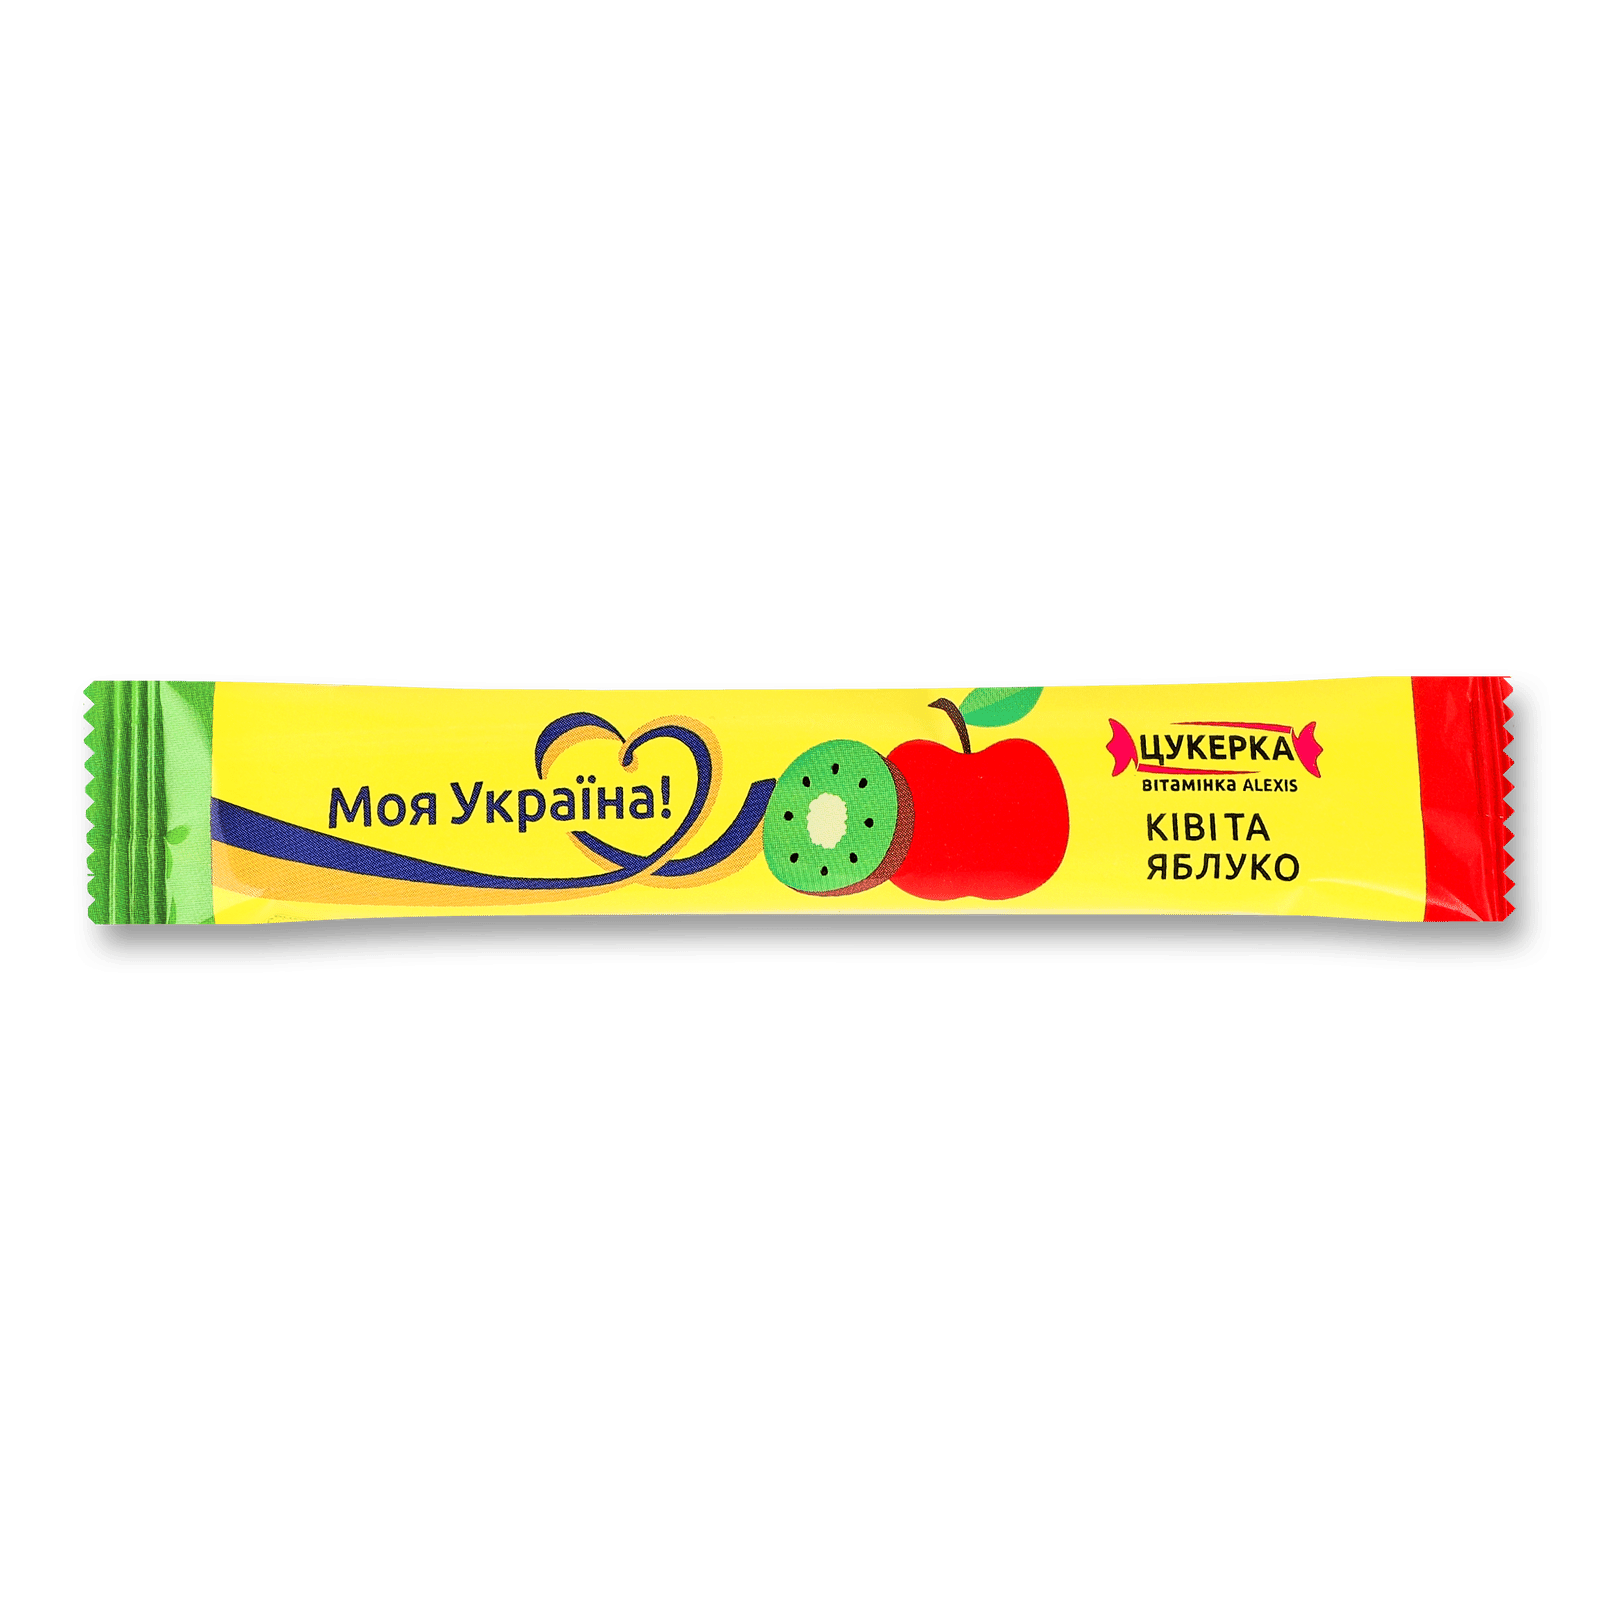 Пастила фруктова цукерка-вітамінка ківі-яблуко - 1